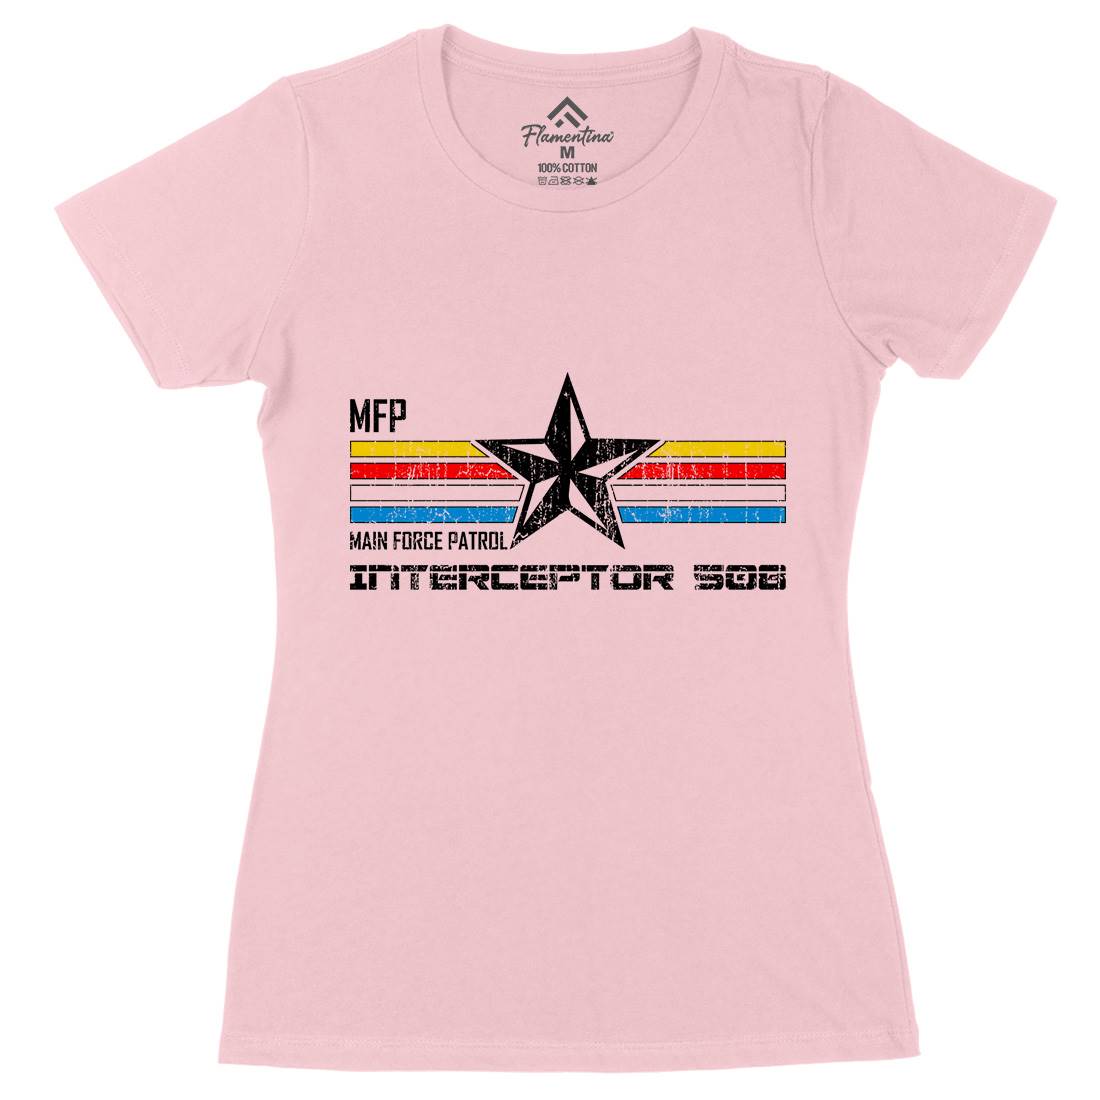 Mfp Womens Organic Crew Neck T-Shirt Cars D394